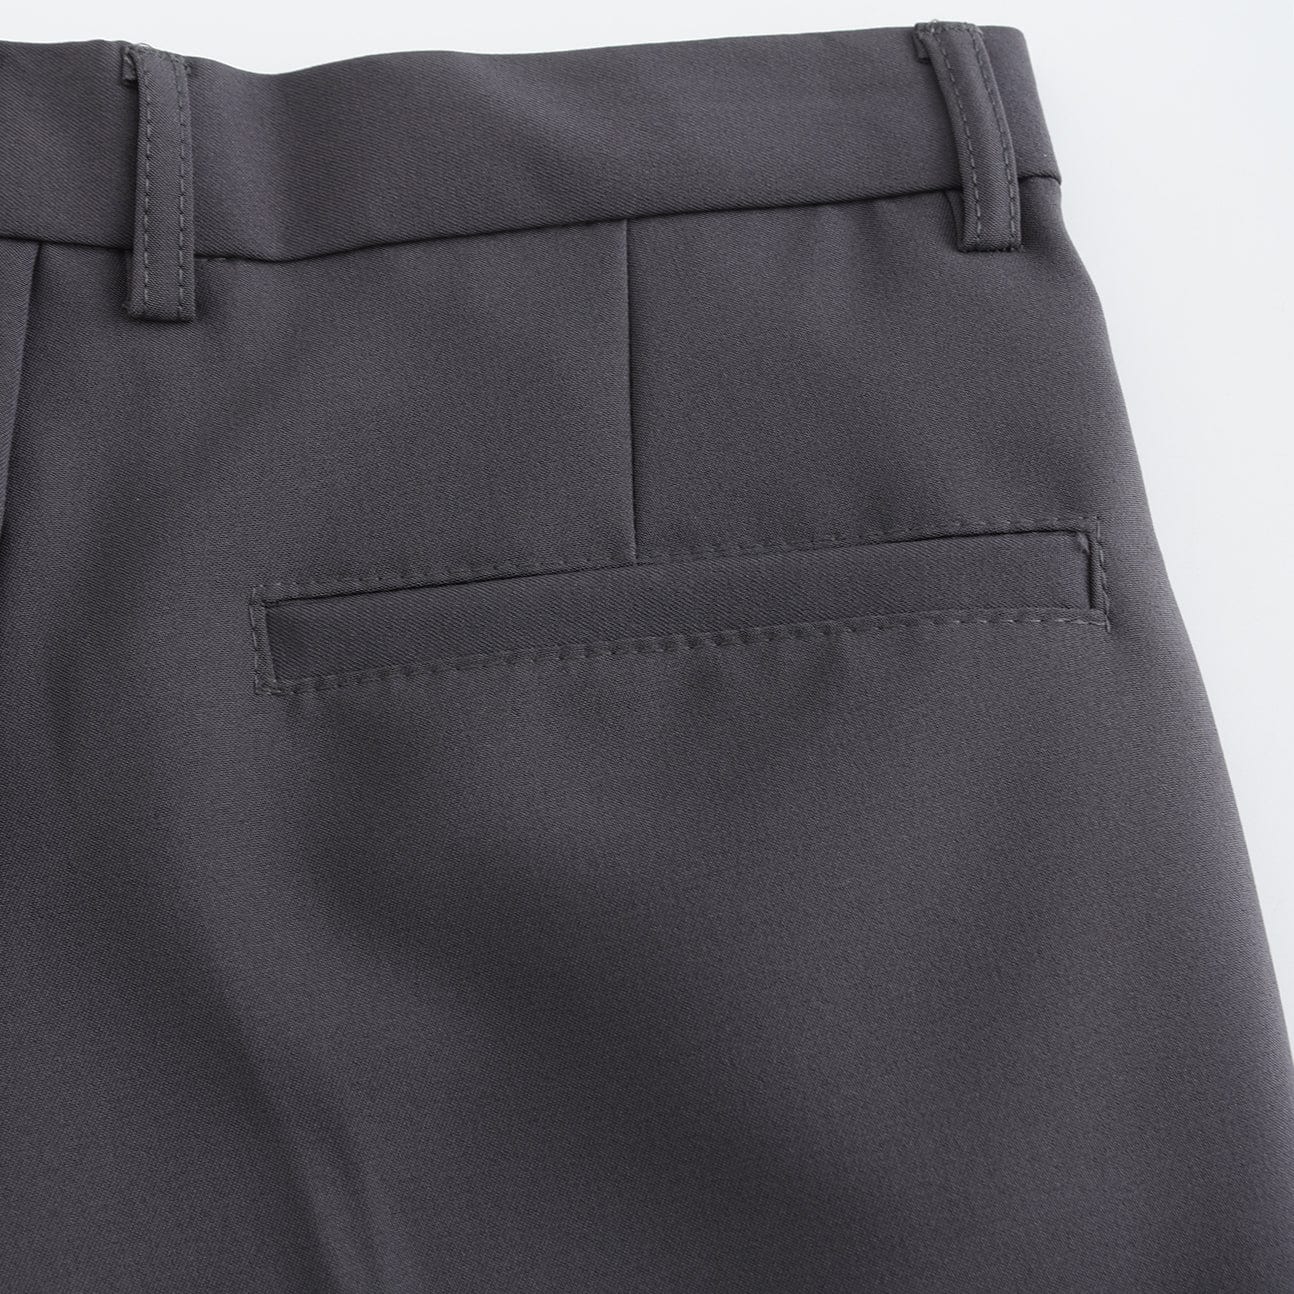 Buy Y M Enterprises Unisex Lycra Fabric Lower, Track Pants Bottom Wear for  Men and Women Trouser Black at Amazon.in